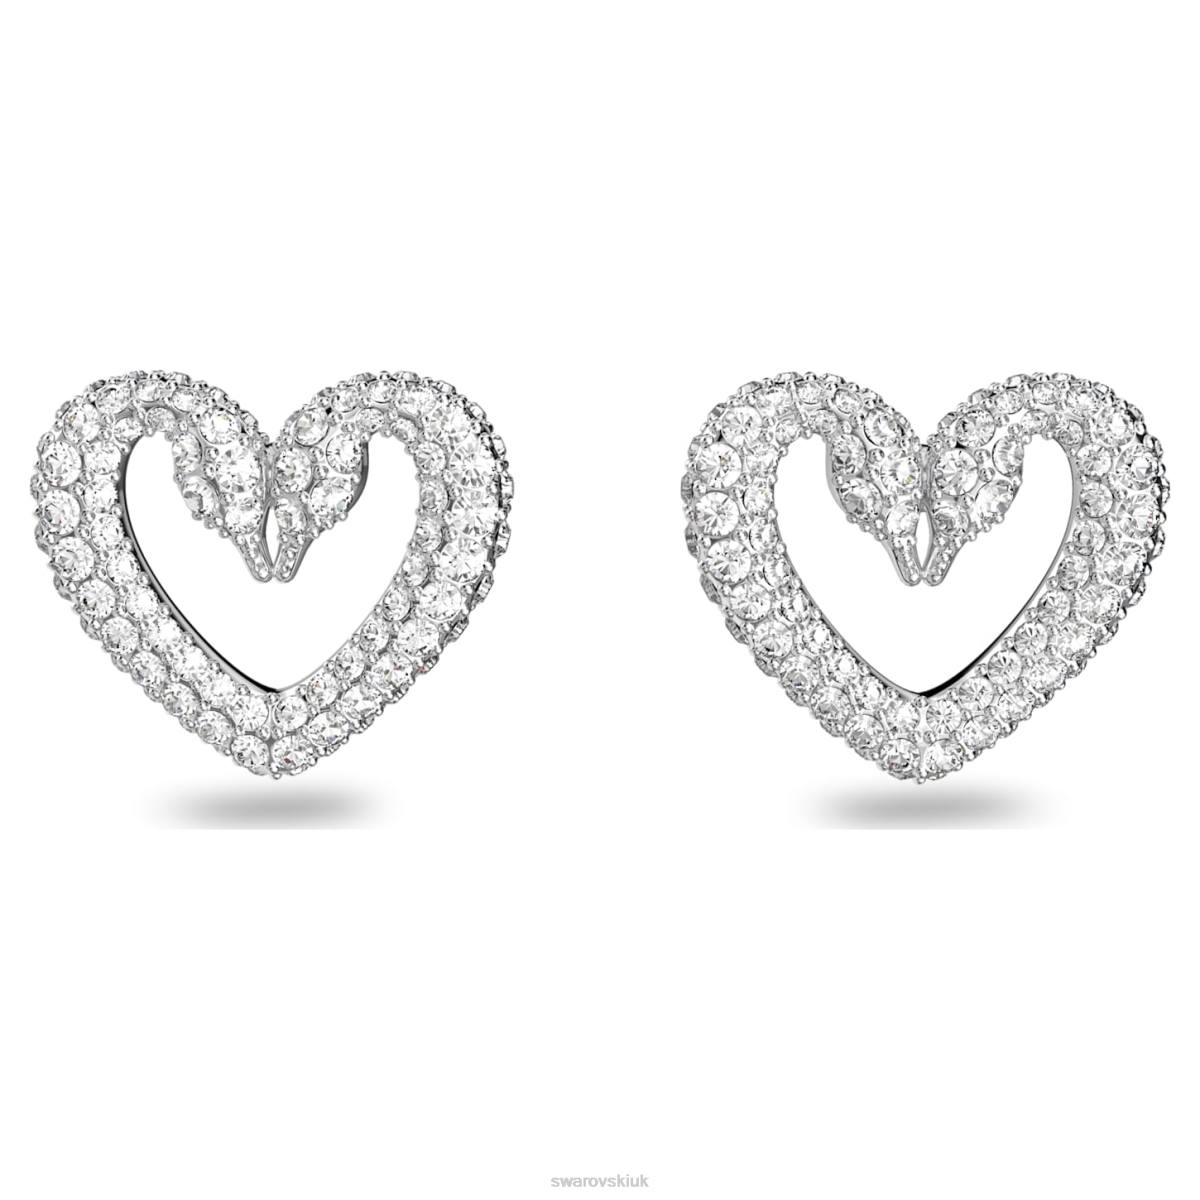 Jewelry Swarovski Una stud earrings Heart, White, Rhodium plated 48JX710